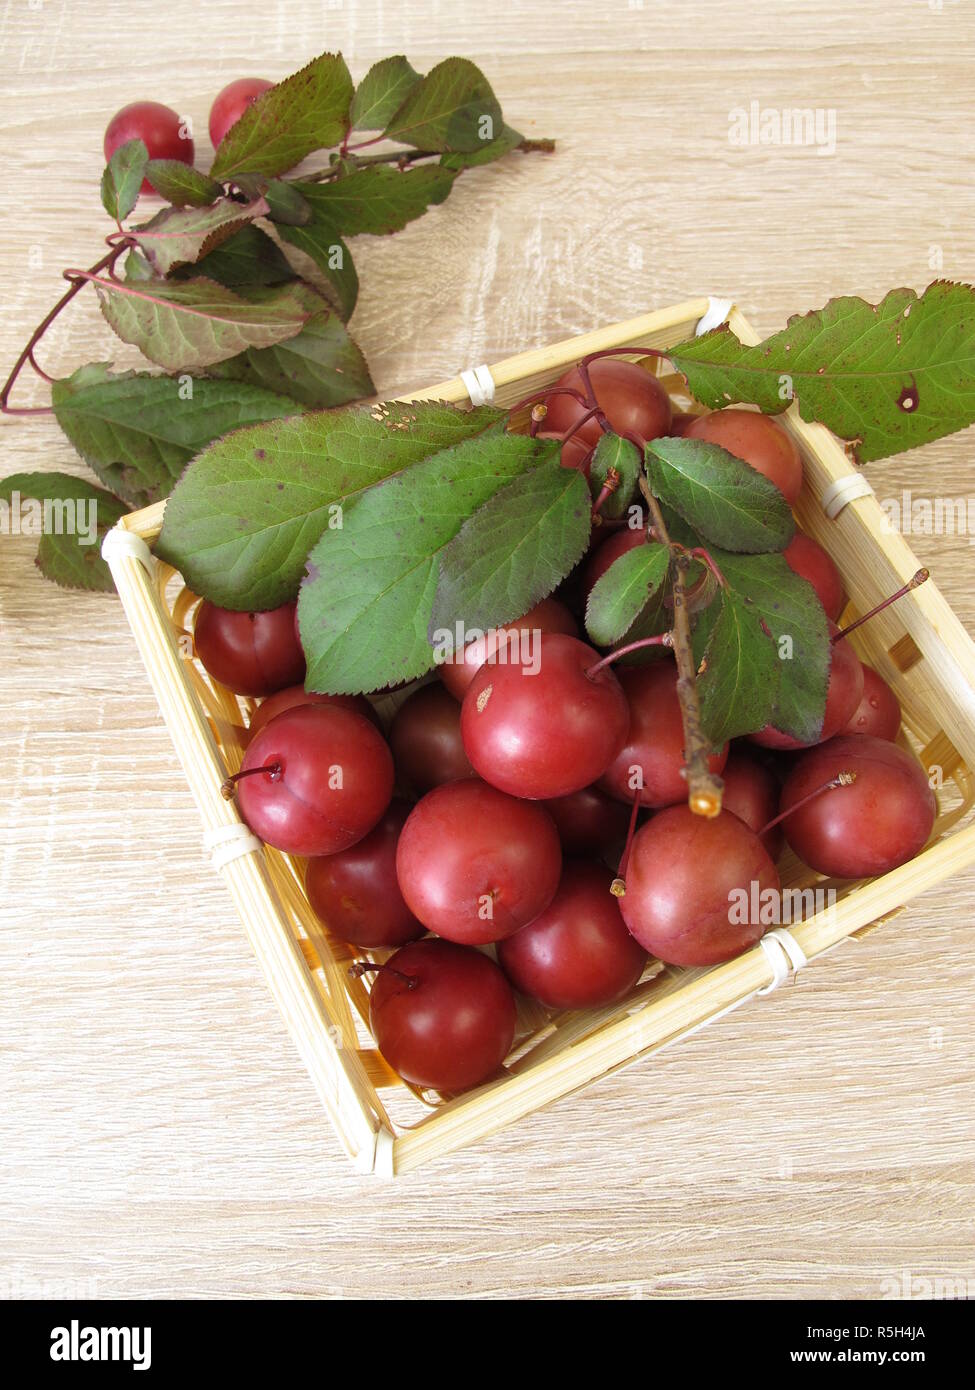 Sang brun,Prunus cerasifera,dans le panier Banque D'Images